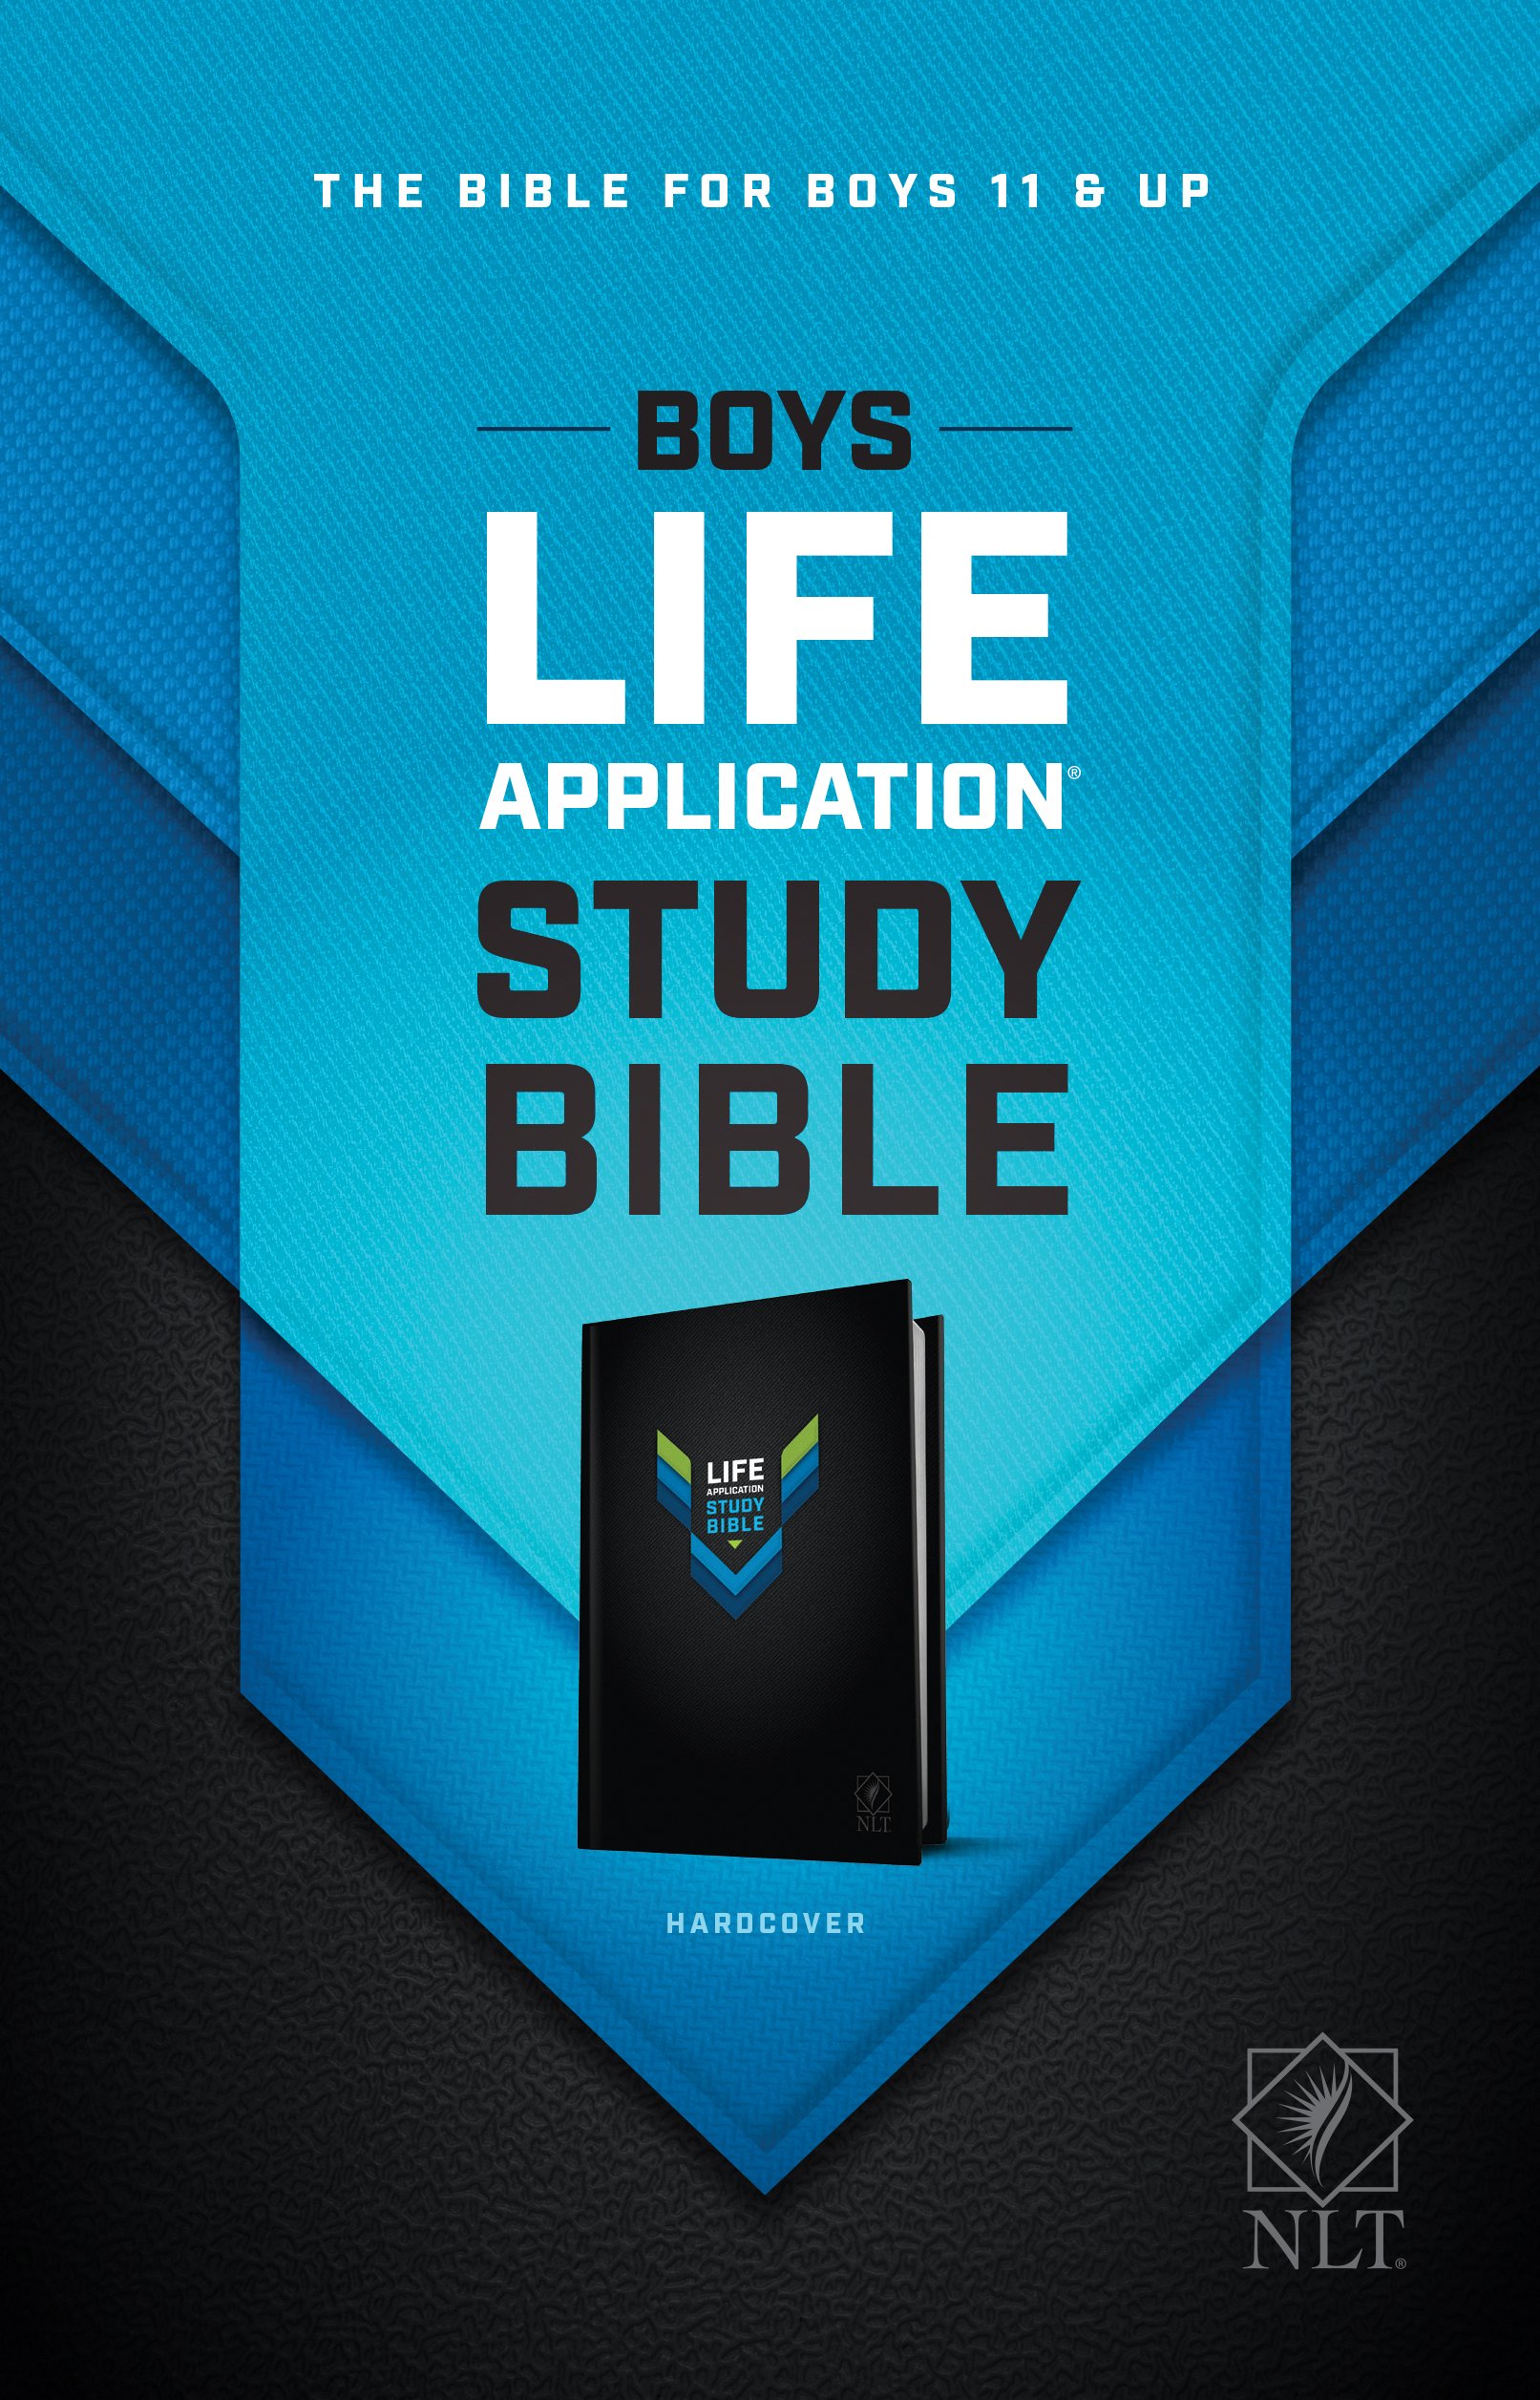 NLT BOYS LIFE APPLICATION STUDY BIBLE HB